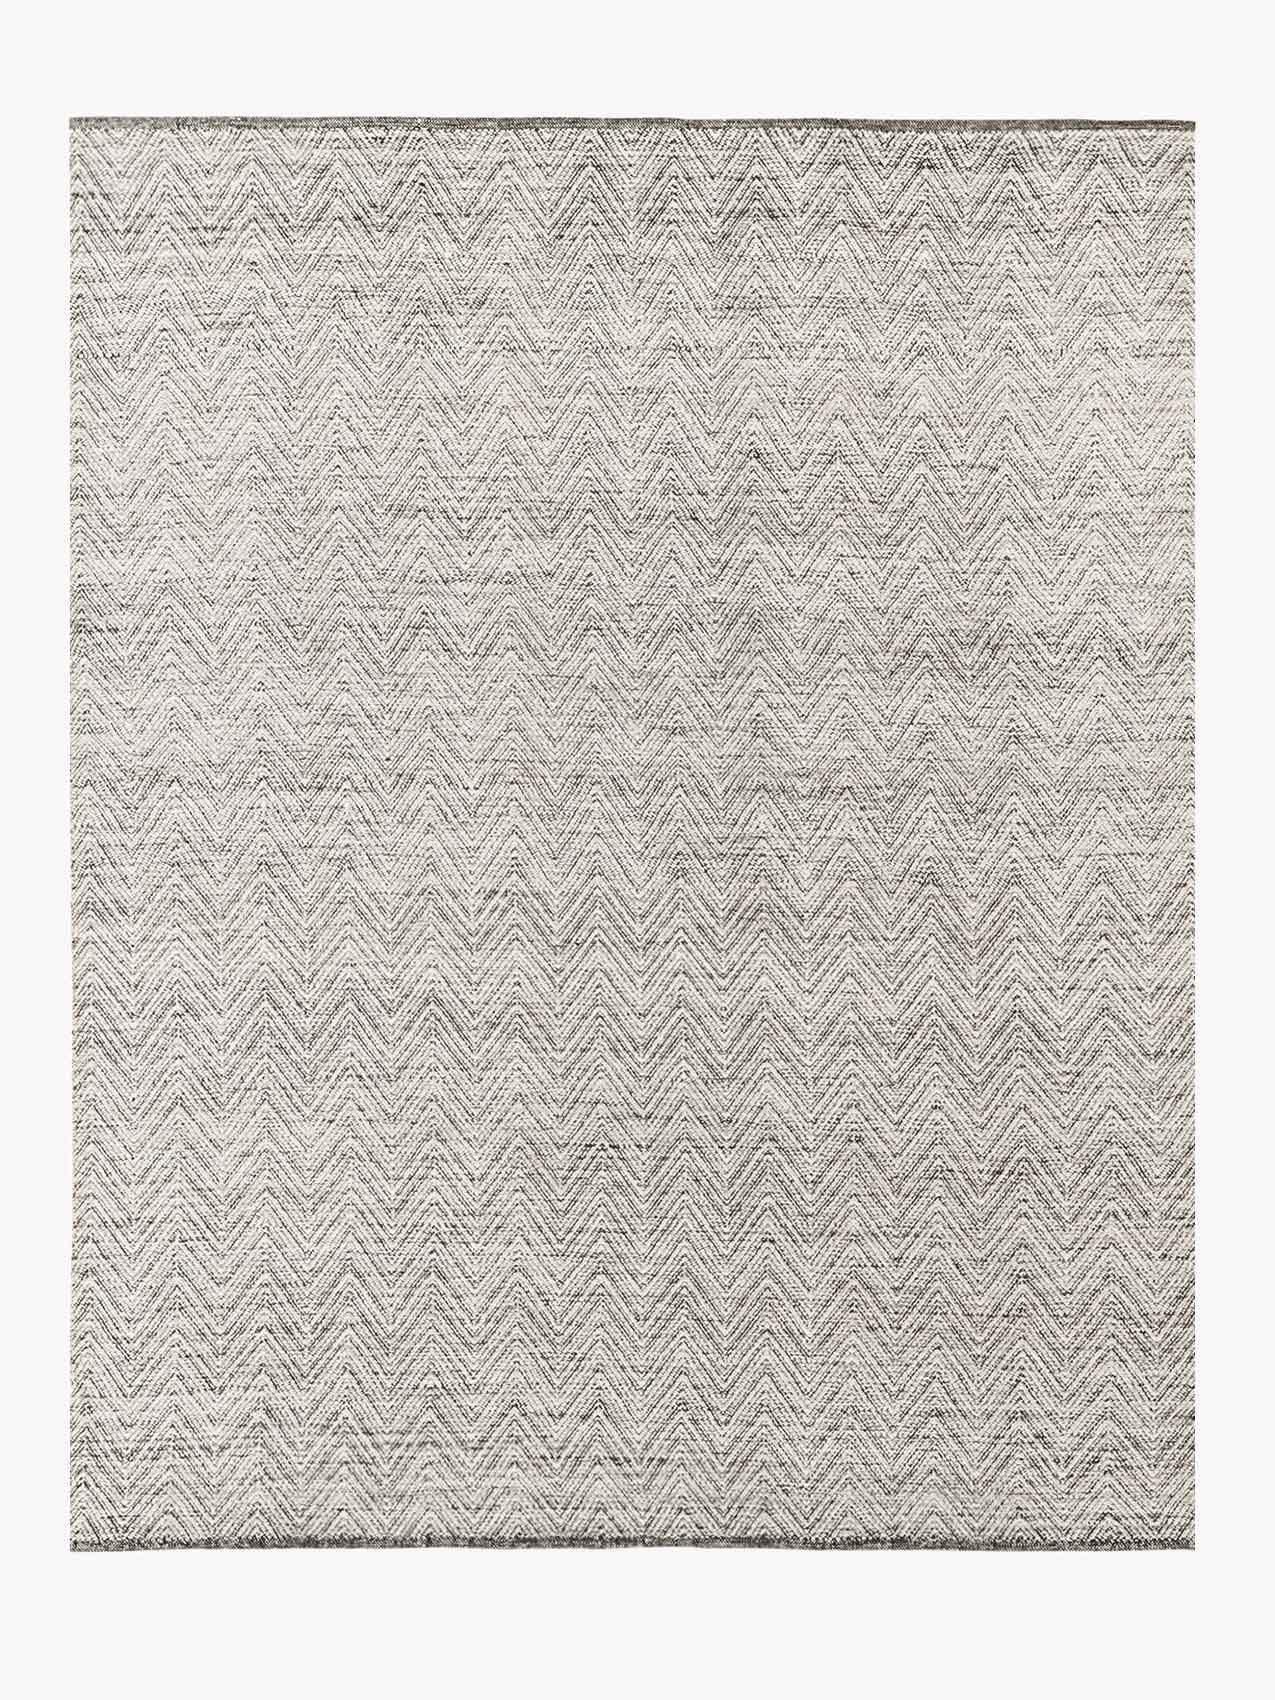 For Sale: Silver Ben Soleimani Ceyah Rug– Hand-woven Plush Textured Wool + Linen Charcoal 6'x9'